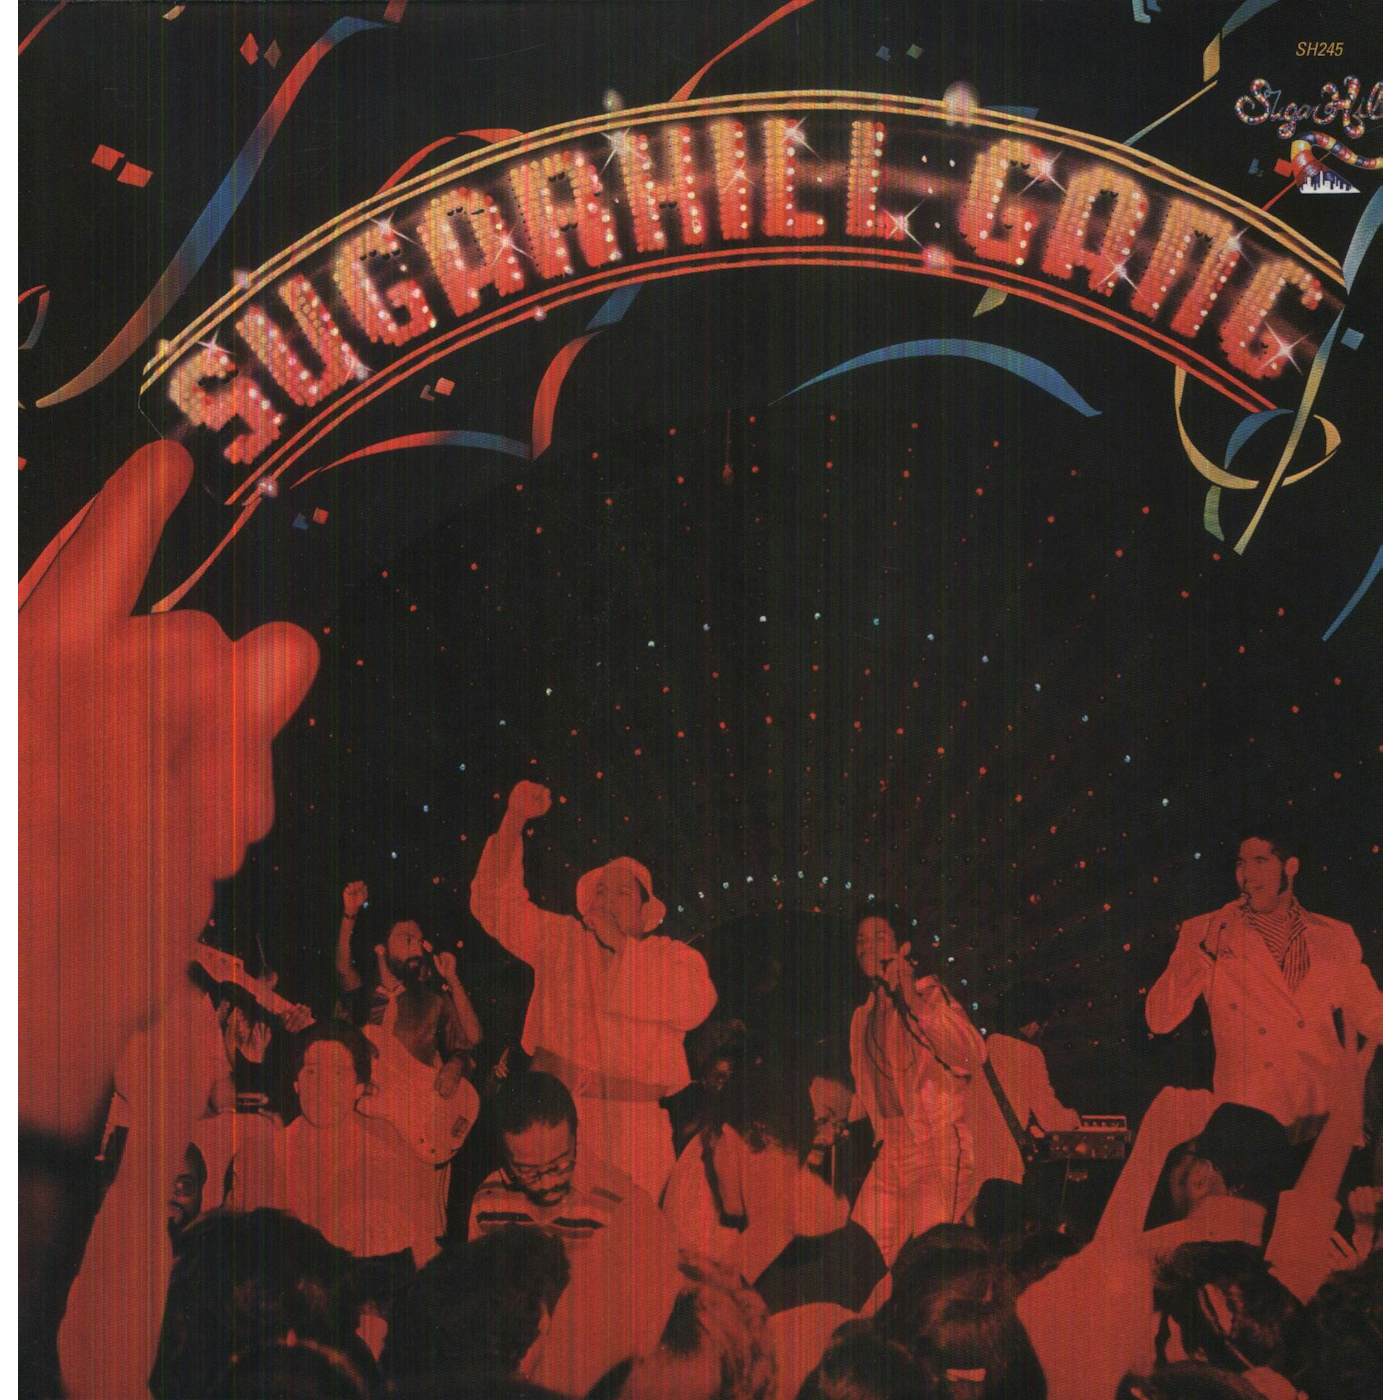 Sugarhill Gang SUGAR HILL GANG Vinyl Record